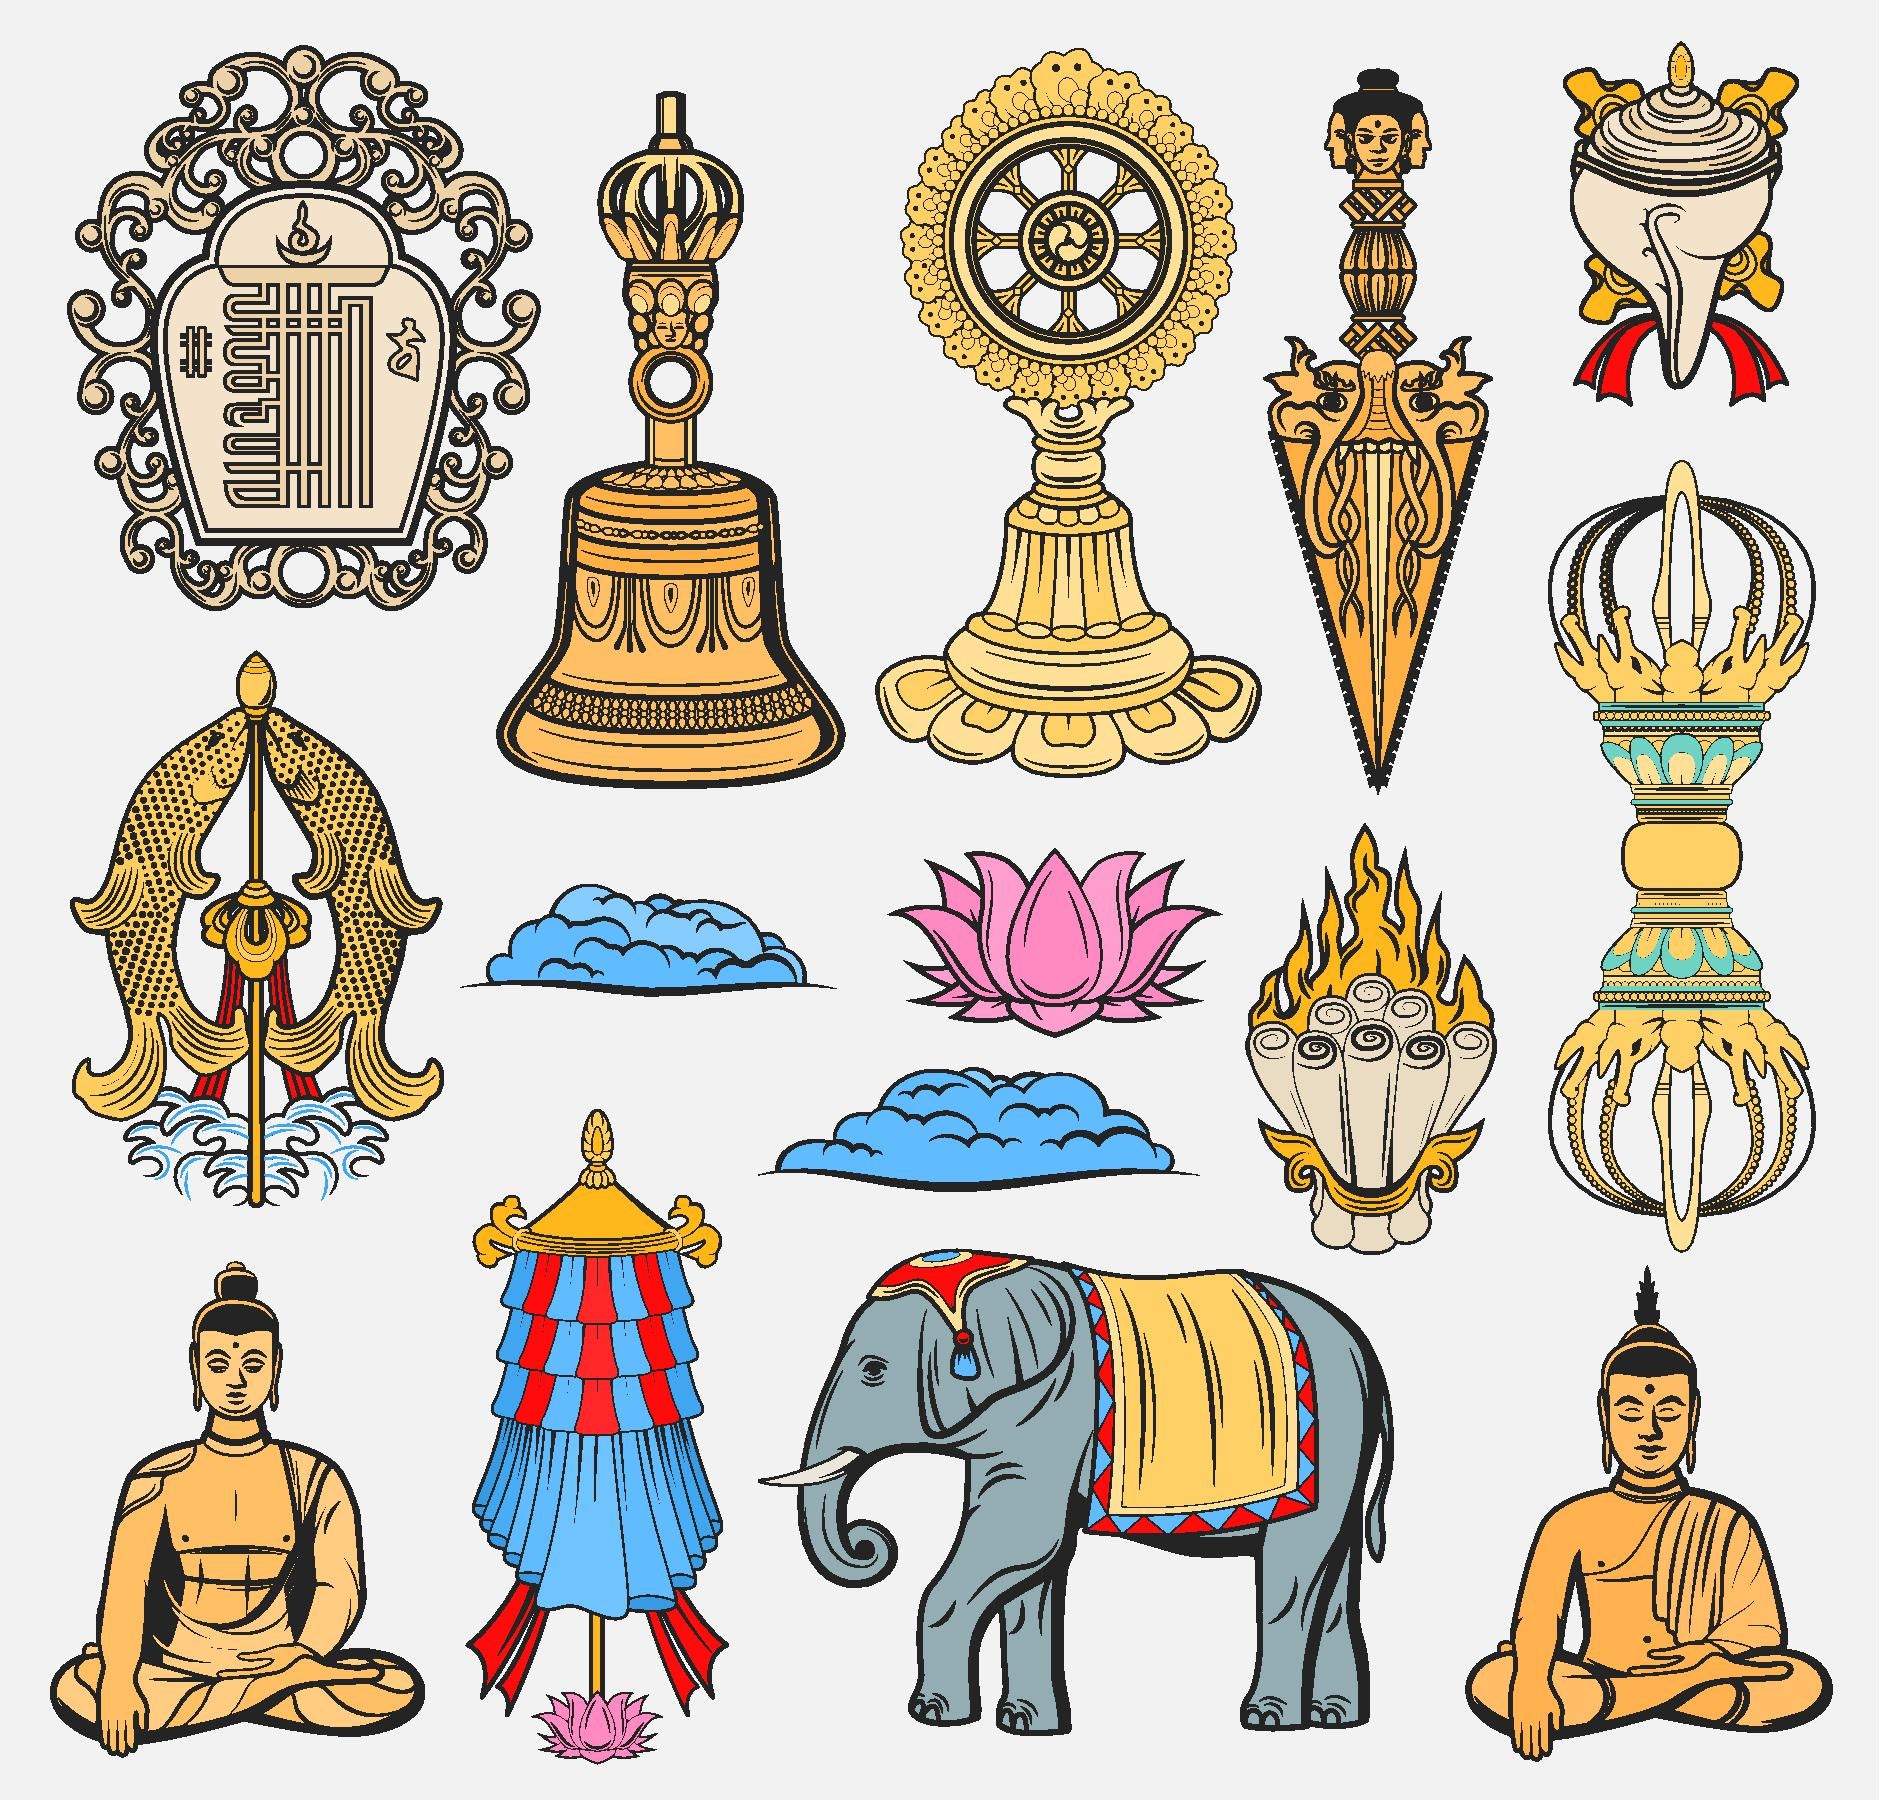 samsara symbol buddhism